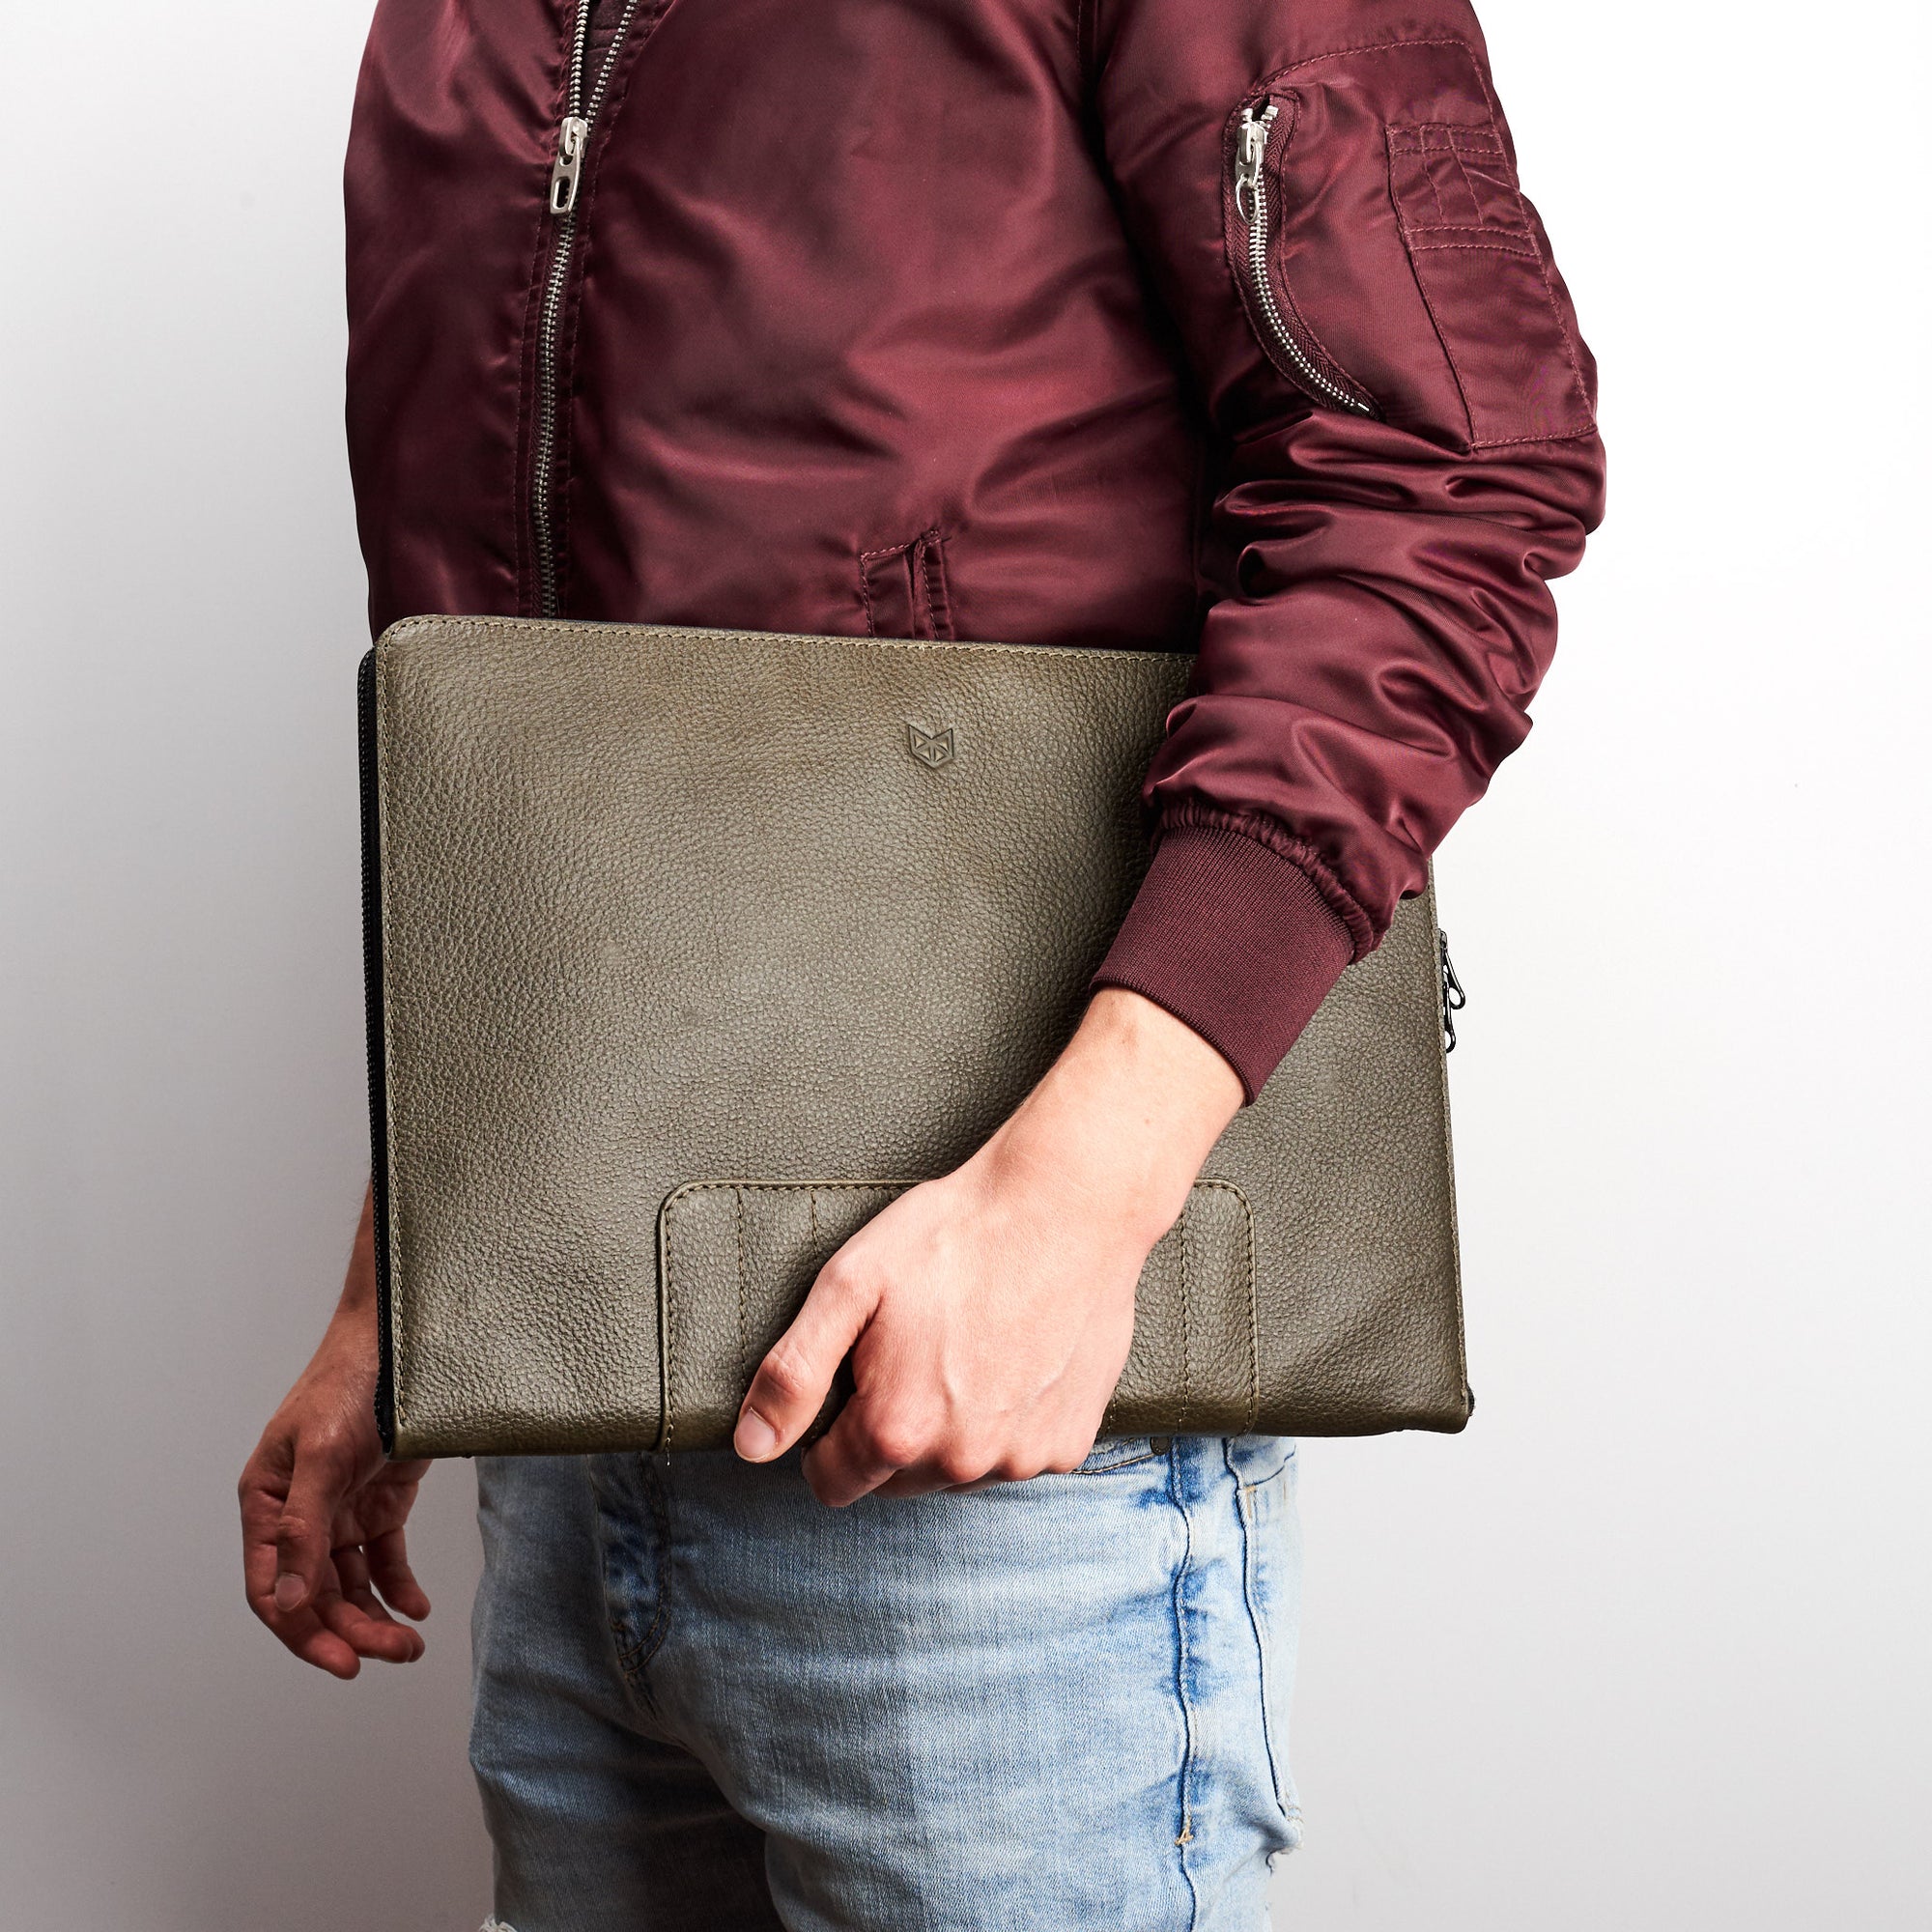 Mens style accessories. Green Leather Laptop Portfolio Case. Laptops & devices Bag.